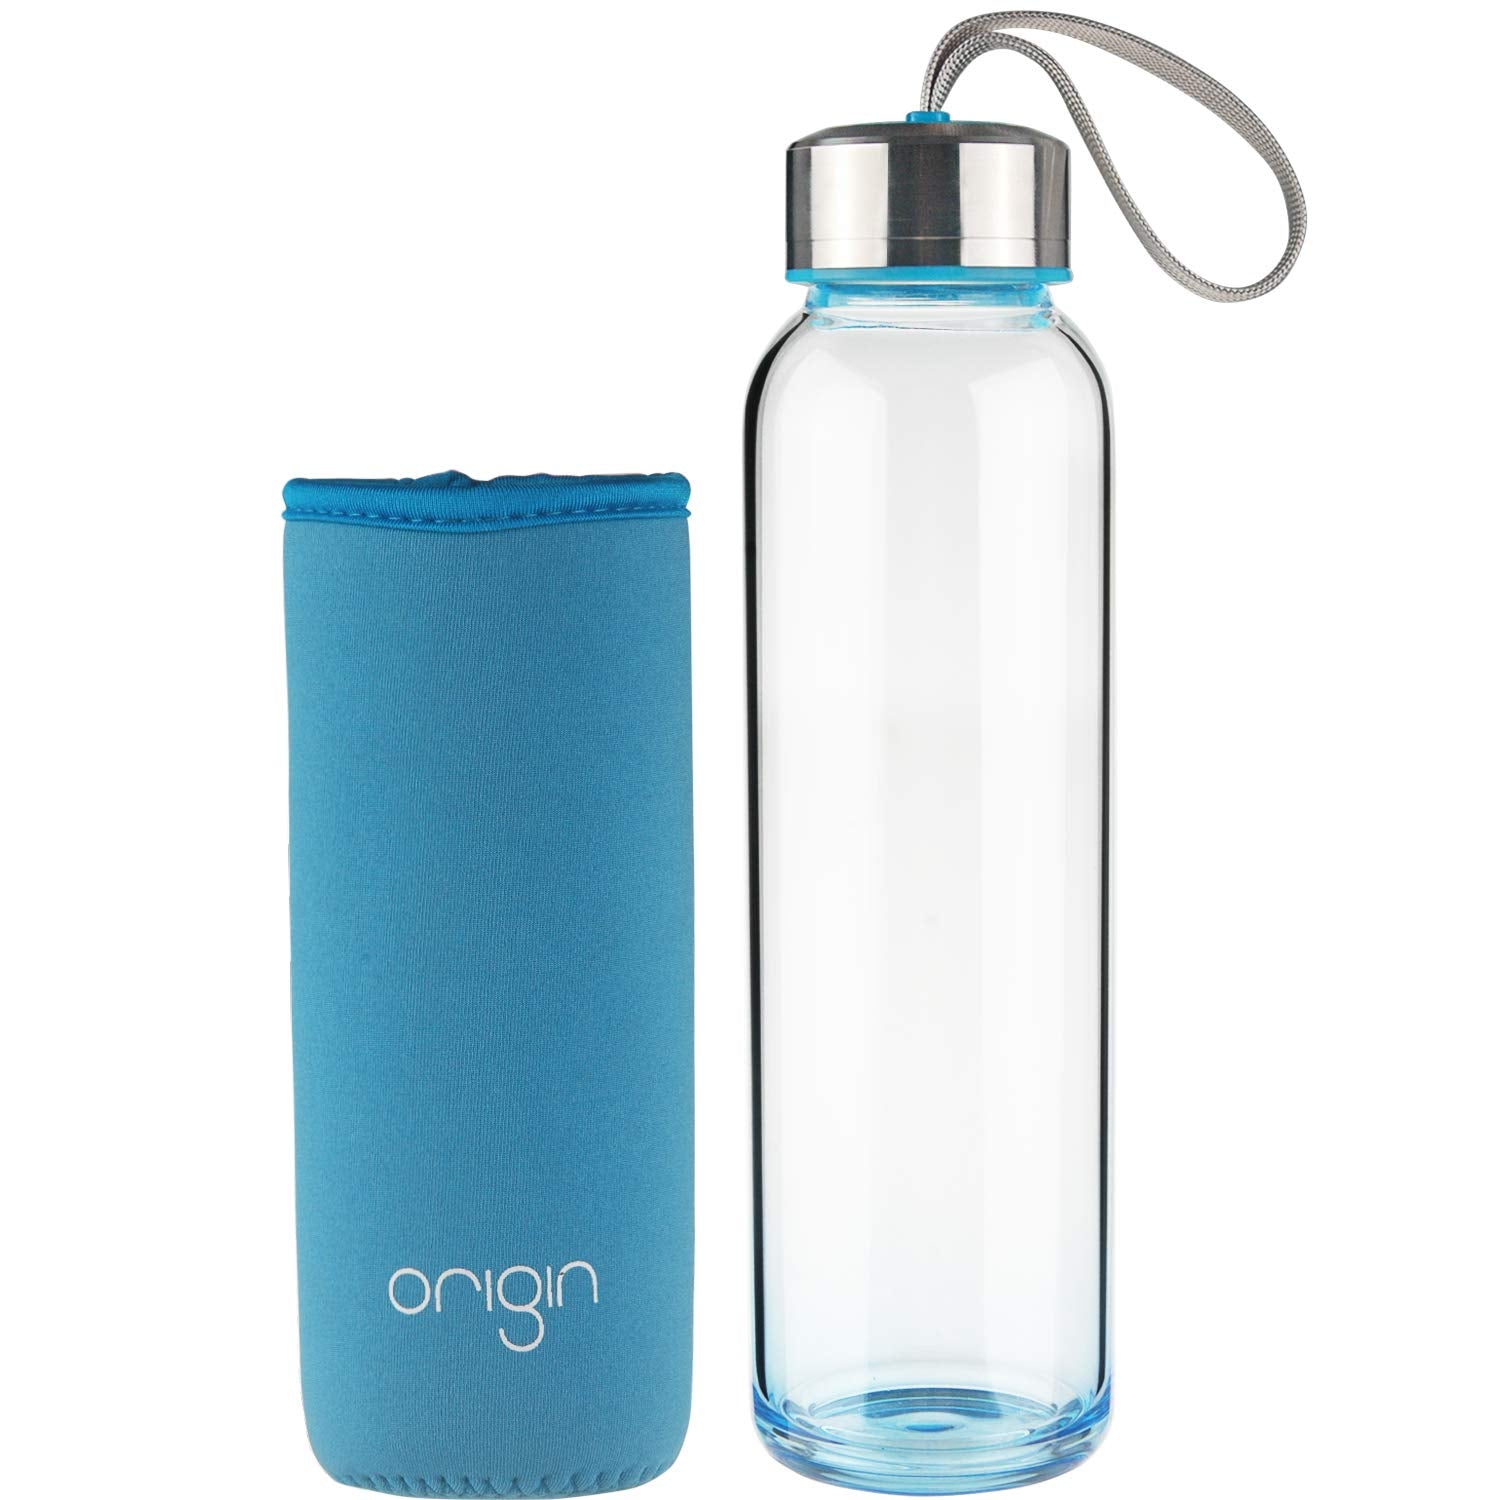 Rioware® Hydraboost Borosilicate Glass Water Bottle with Silicon